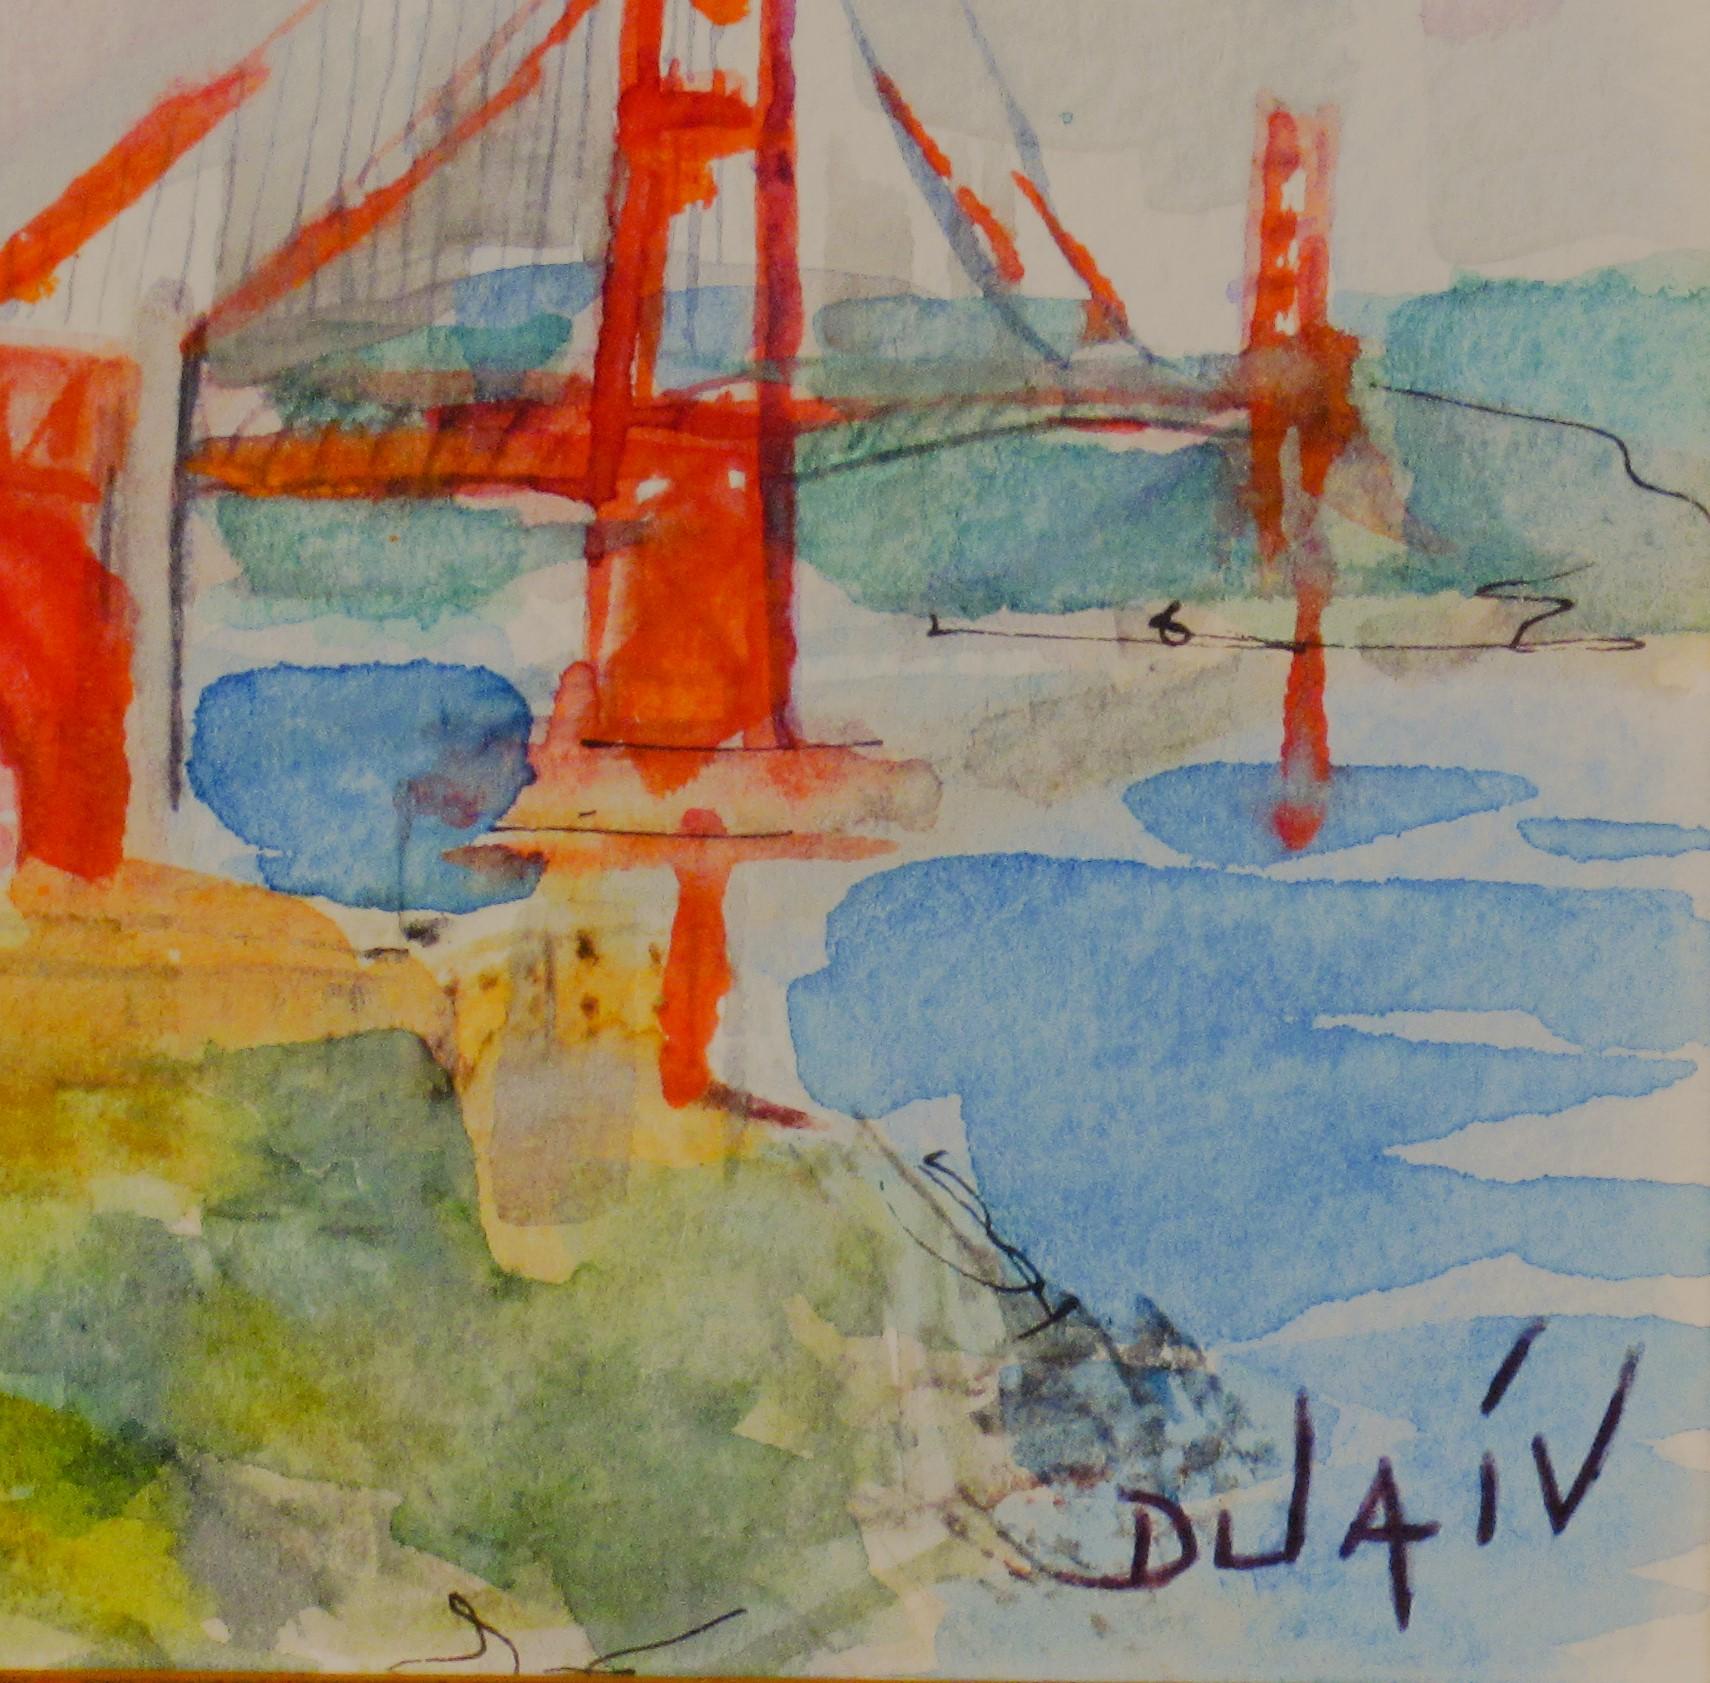 Golden Gate - Impressionist Art by Duaiv 